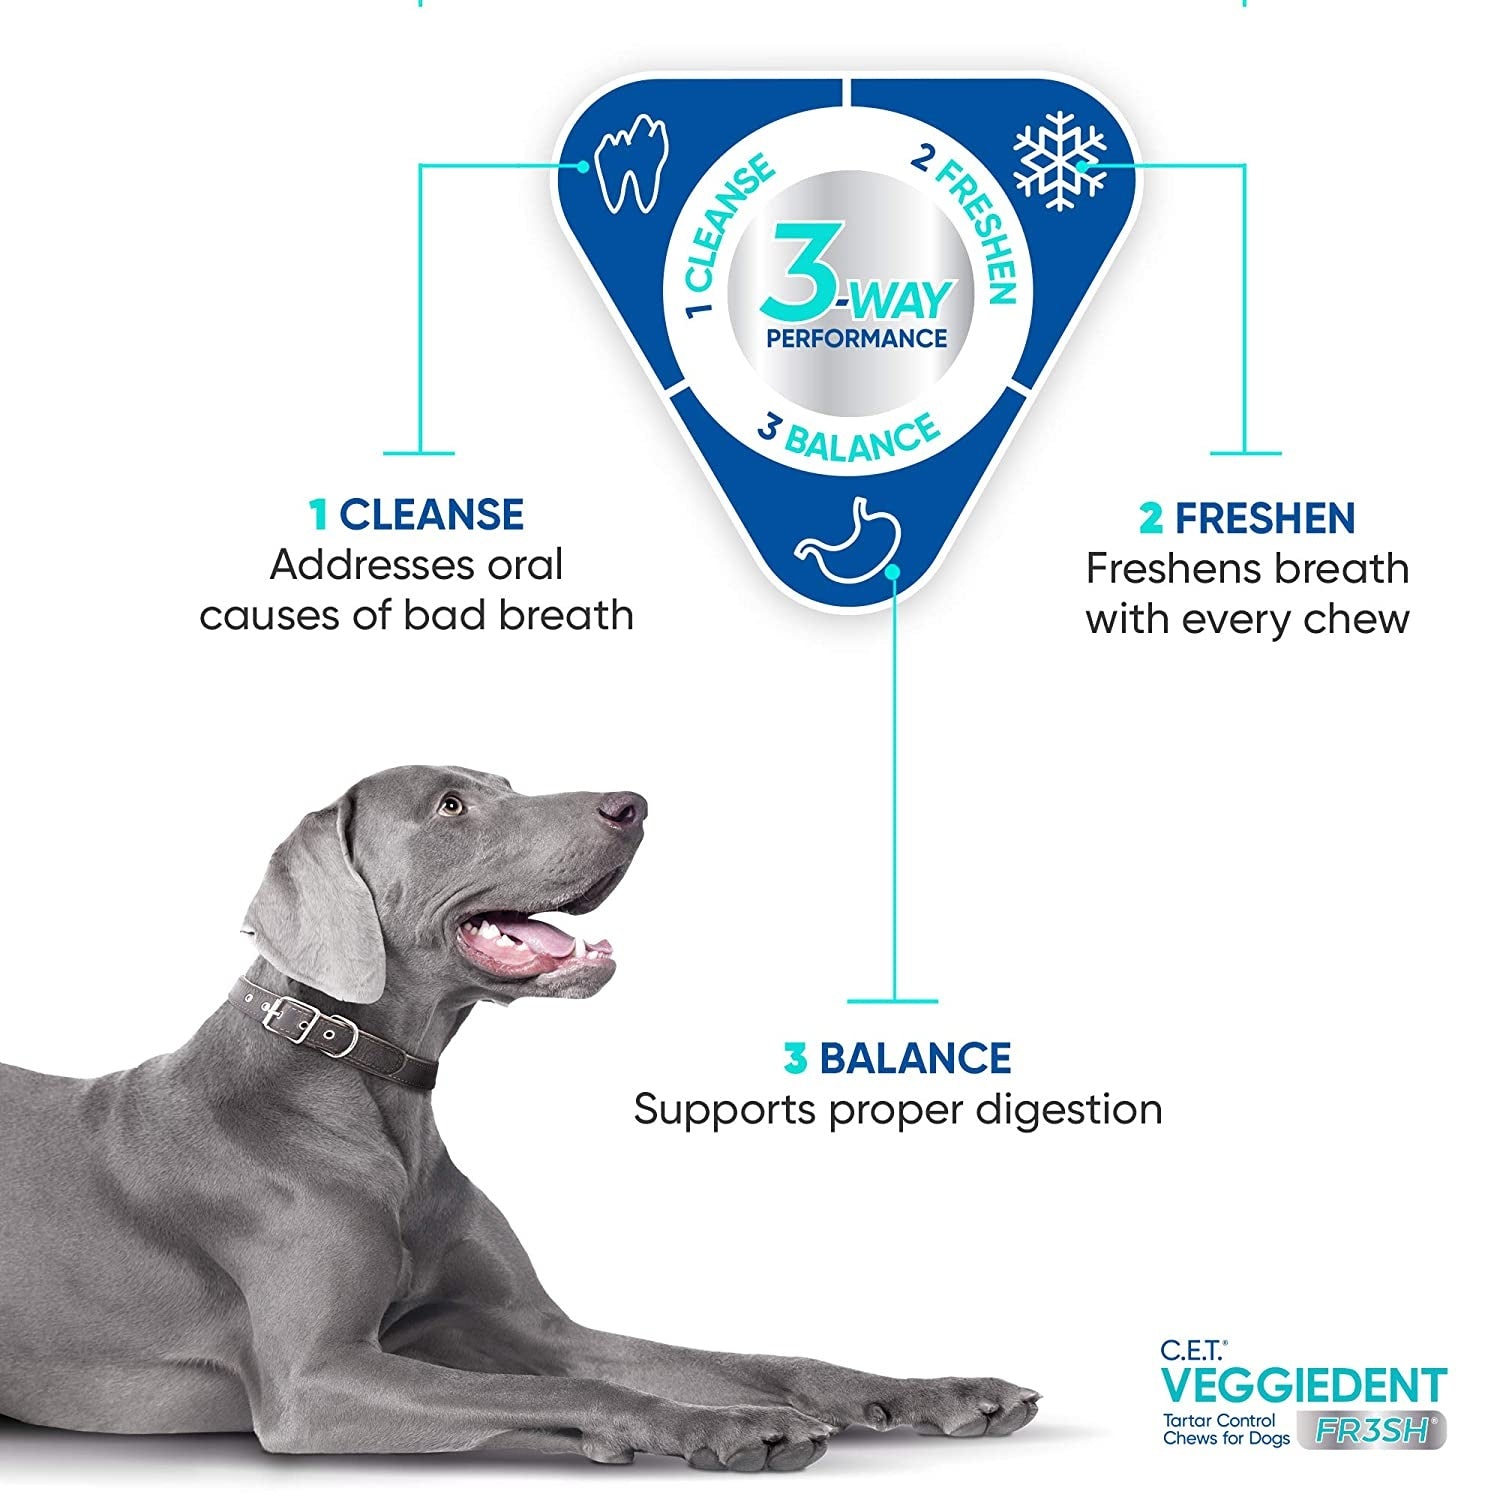 Virbac - Veggie Dent Chews For Small Dogs 5 - 10 Kgs